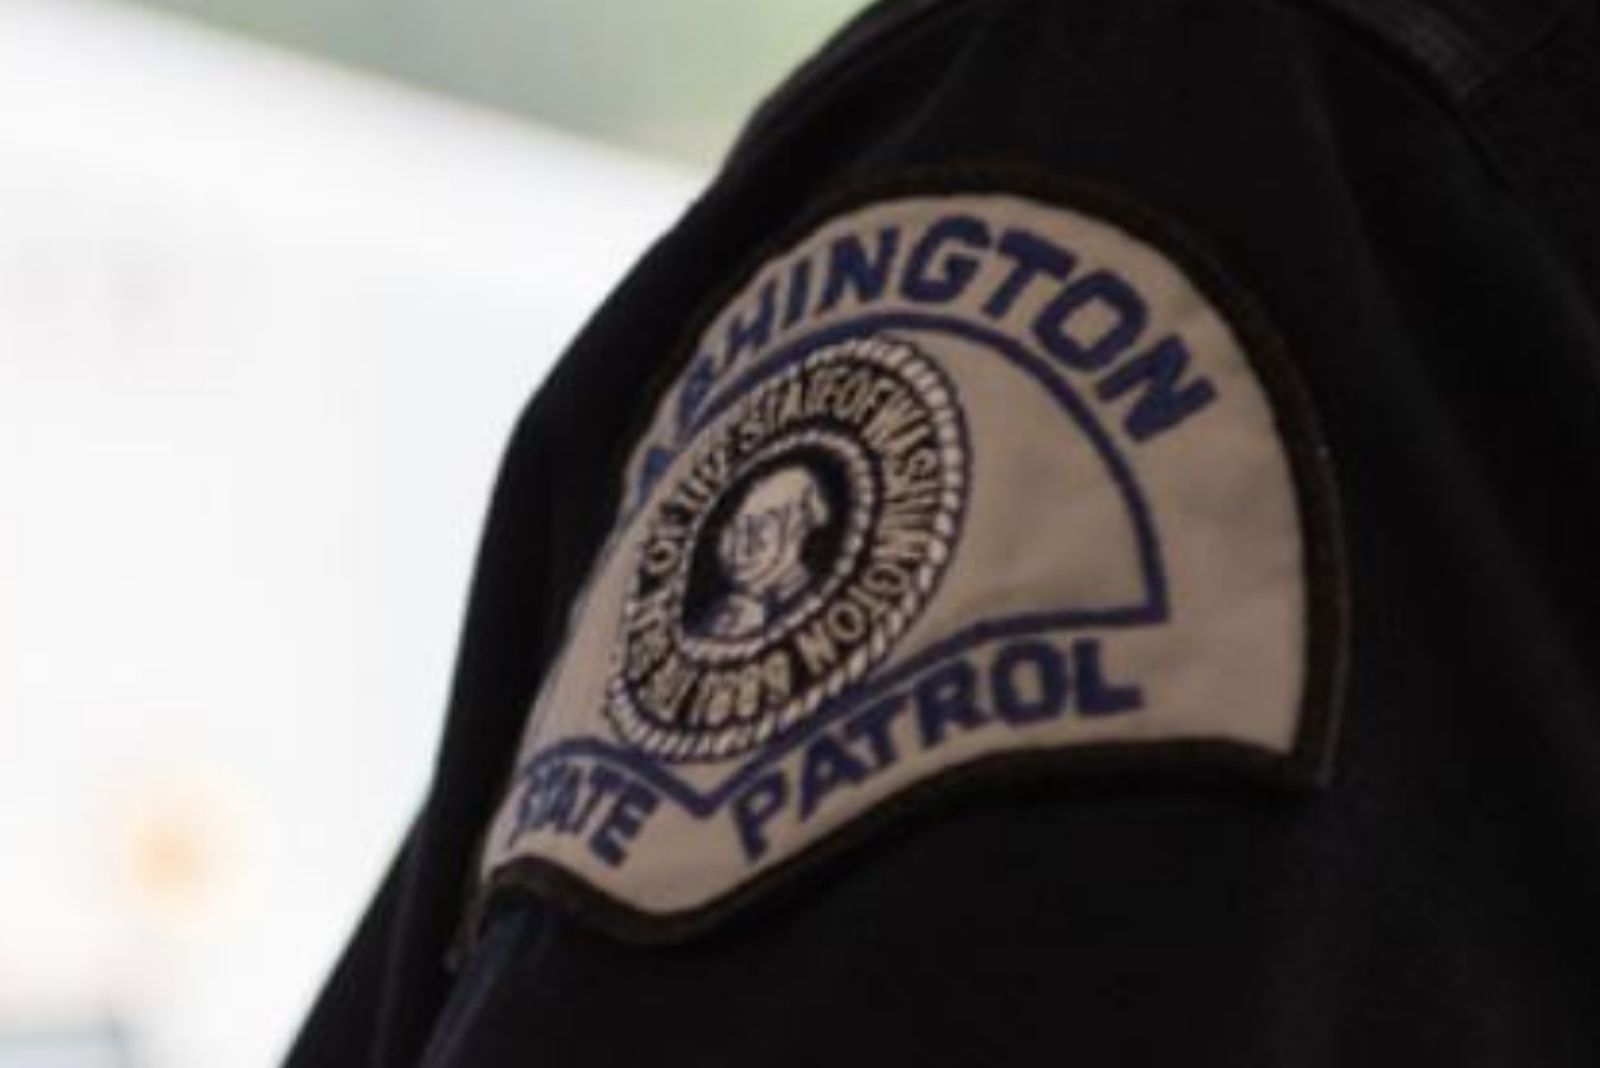 A Washington State Patrol arm badge